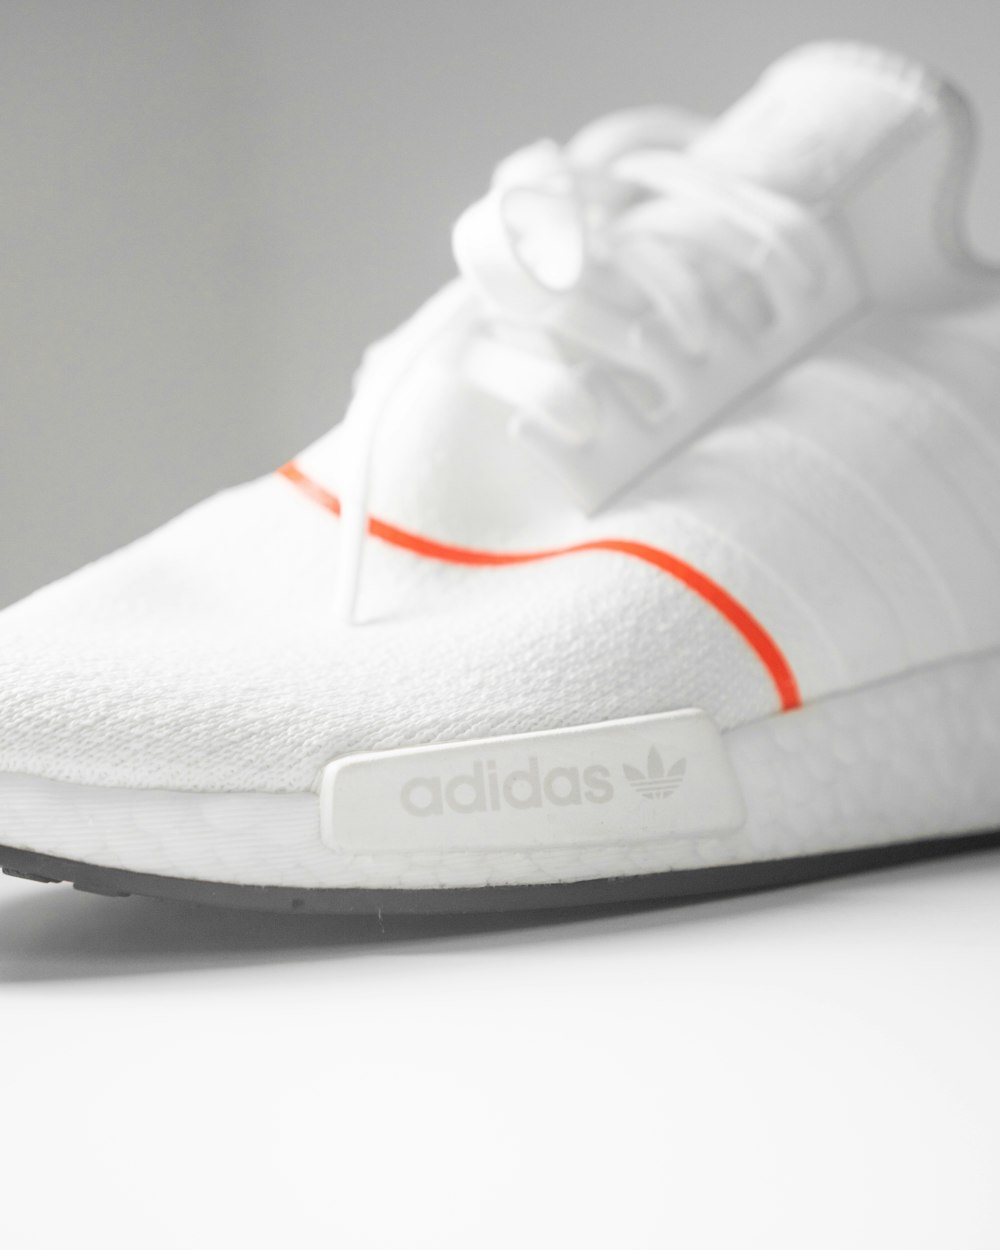 a white adidas sneakers with an orange stripe